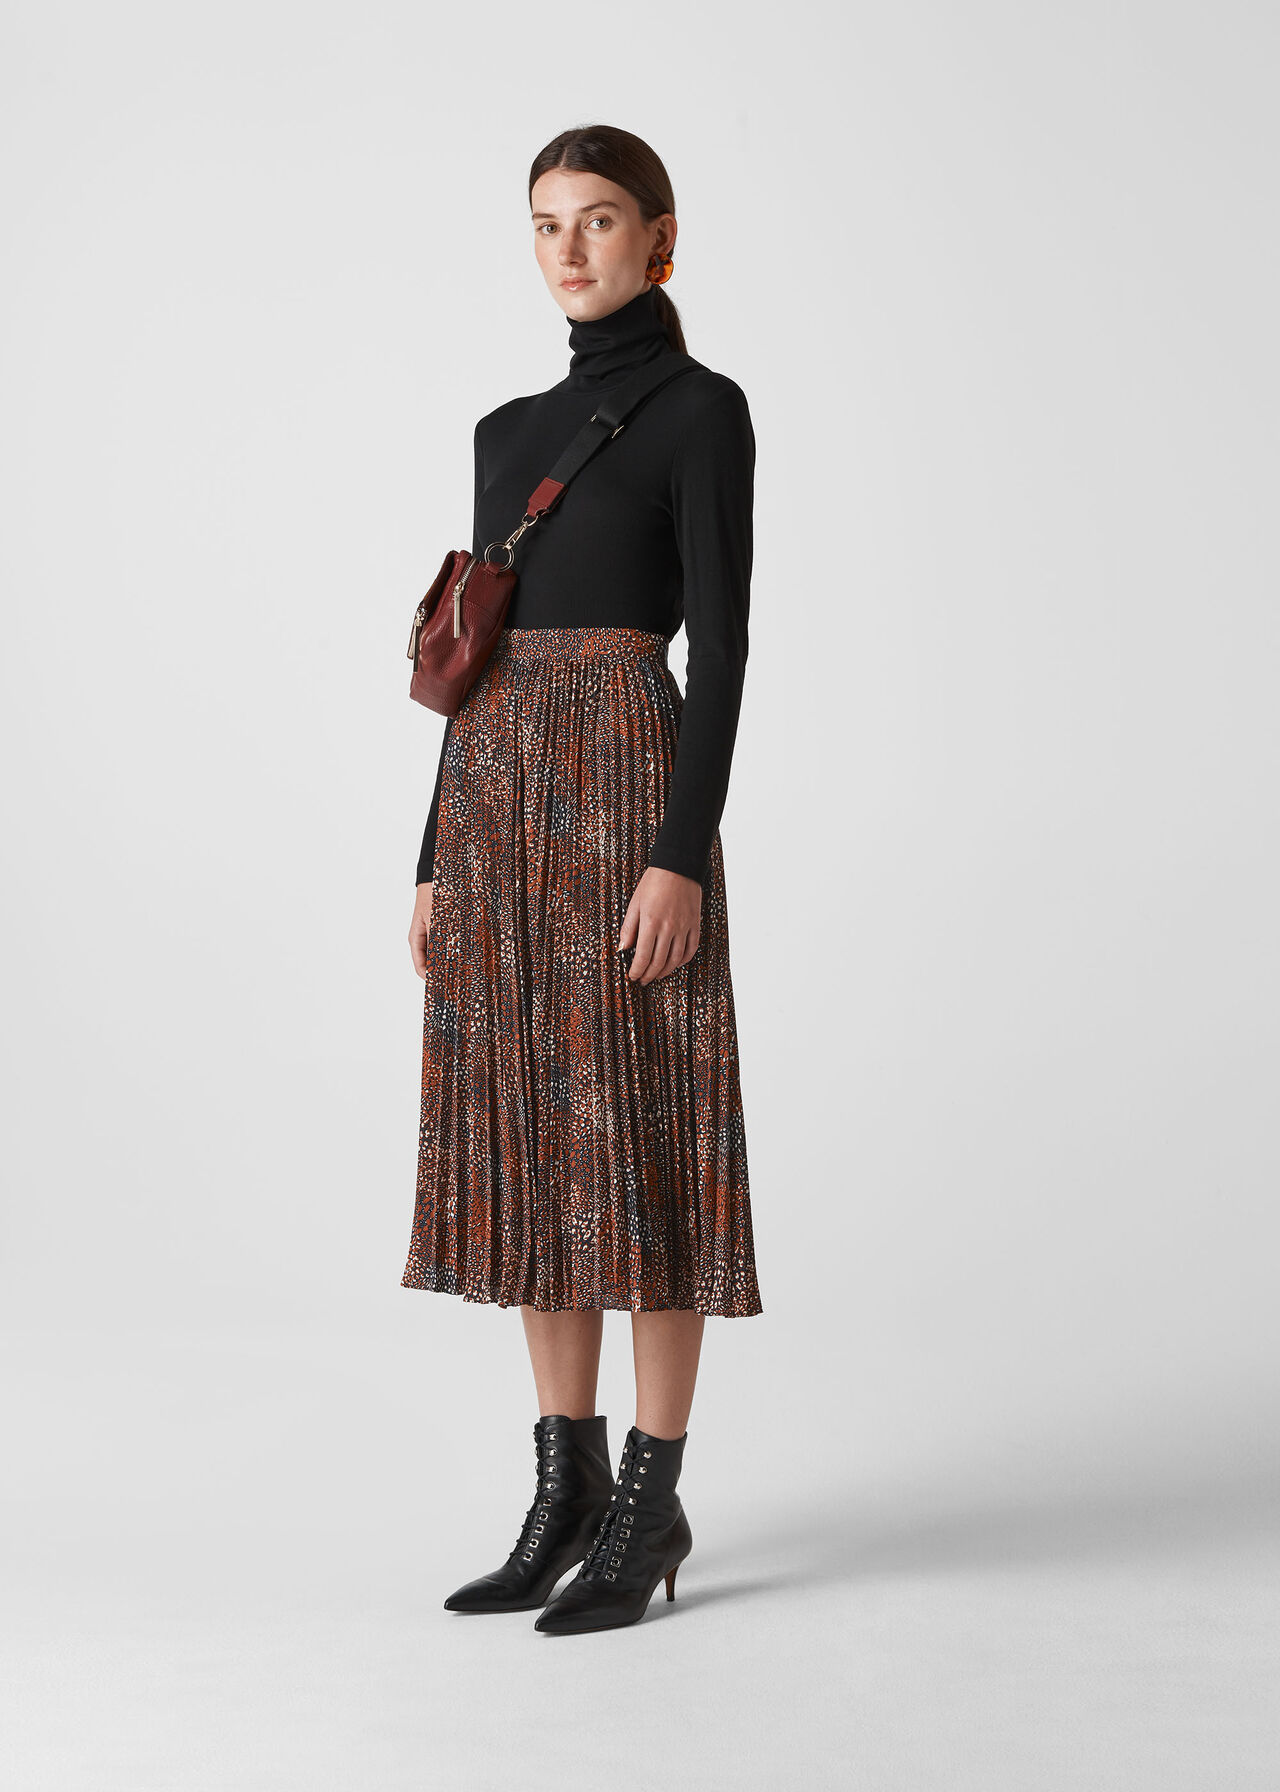 Abstract Animal Longline Skirt Brown/Multi